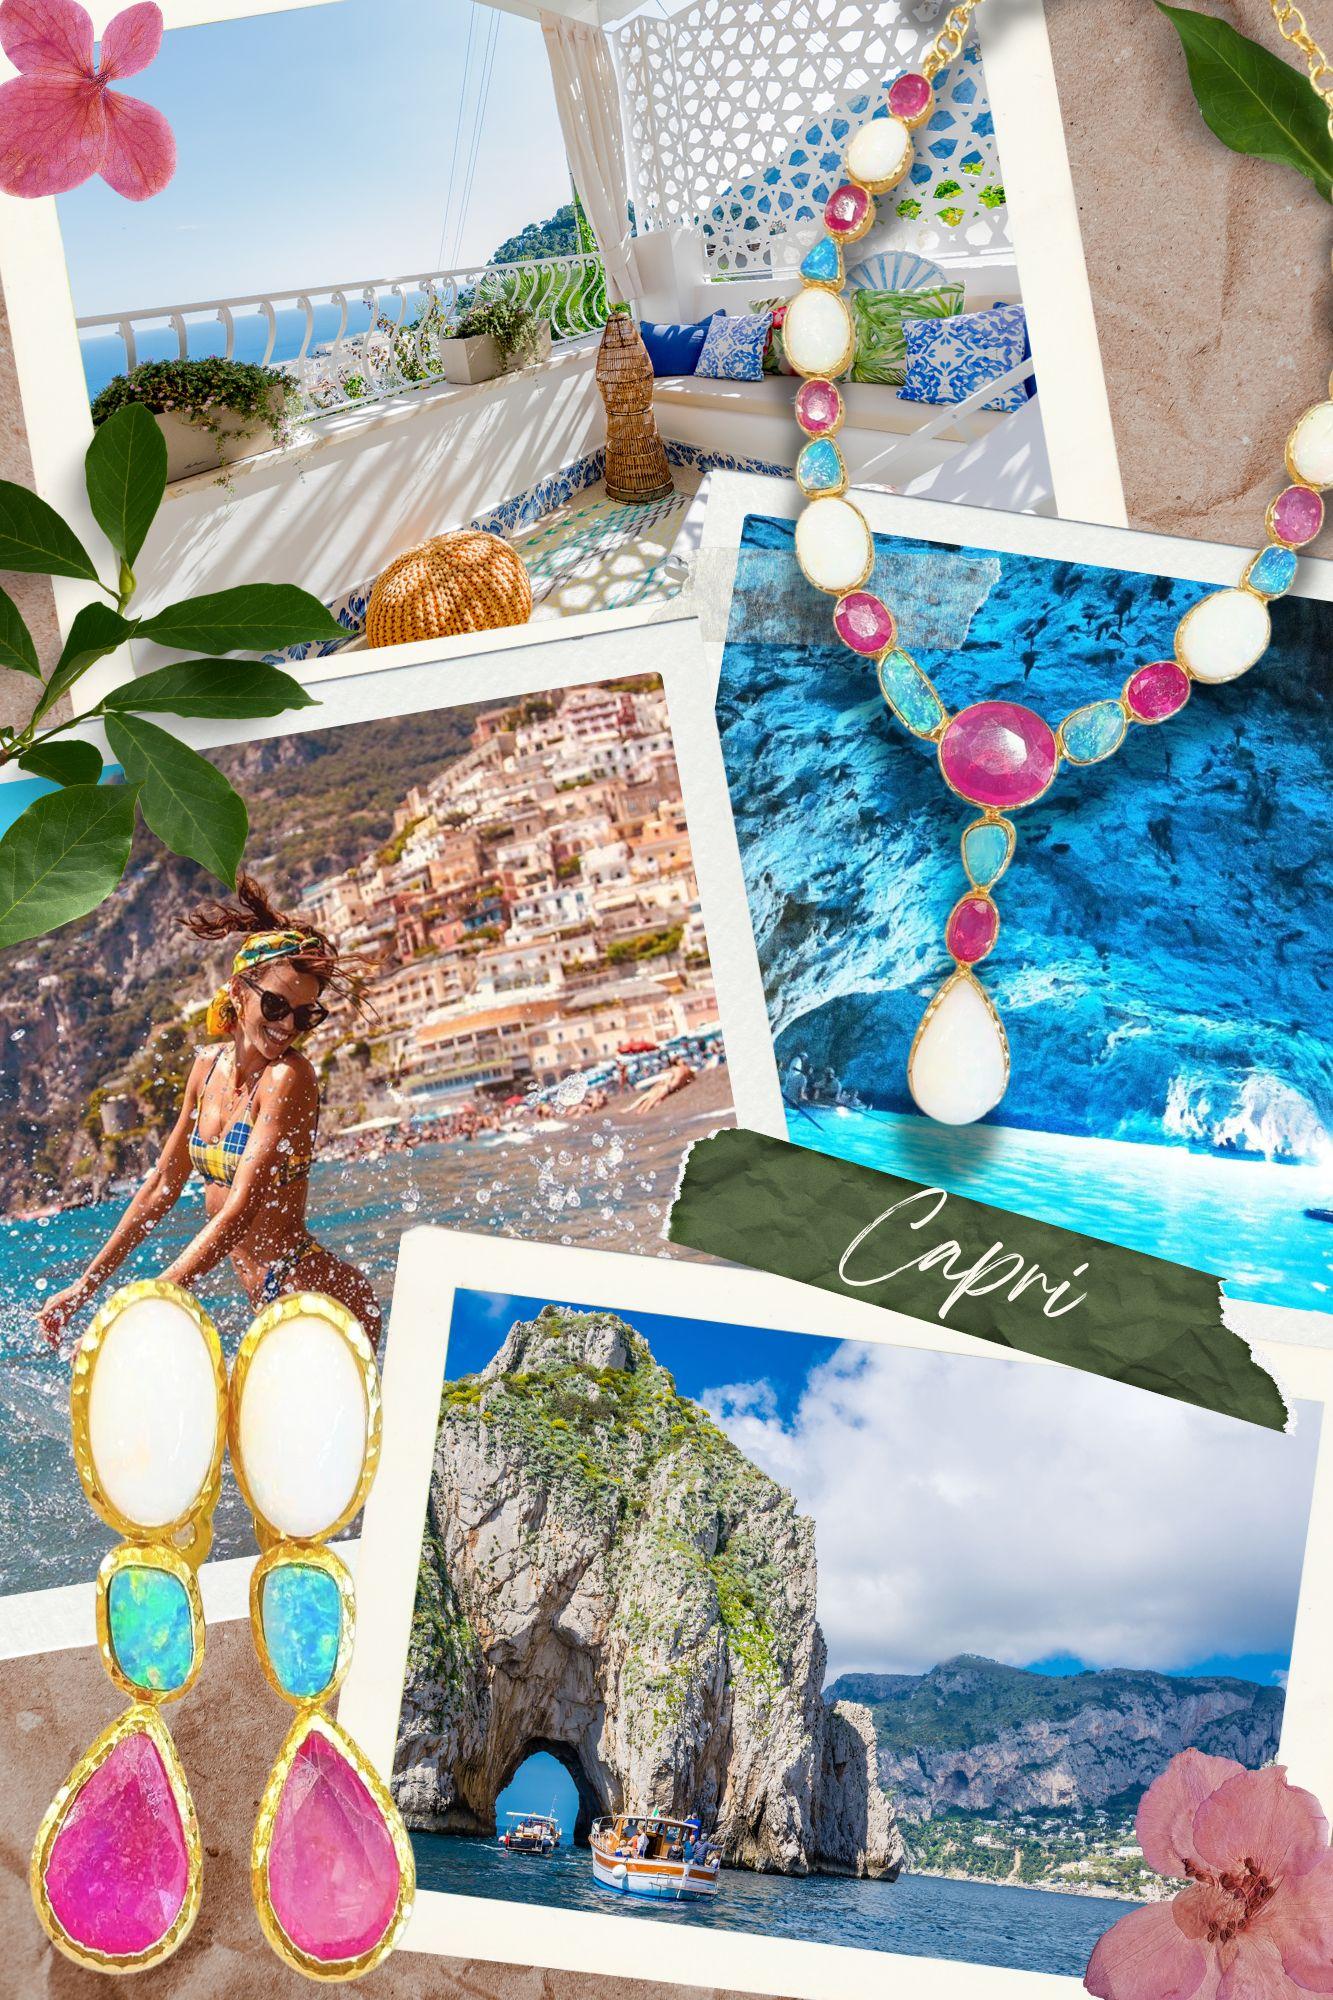 Bochic “Capri” Tahiti Pearl, Multi Color Tourmaline Cocktail Ring Set 22K&Silver For Sale 2